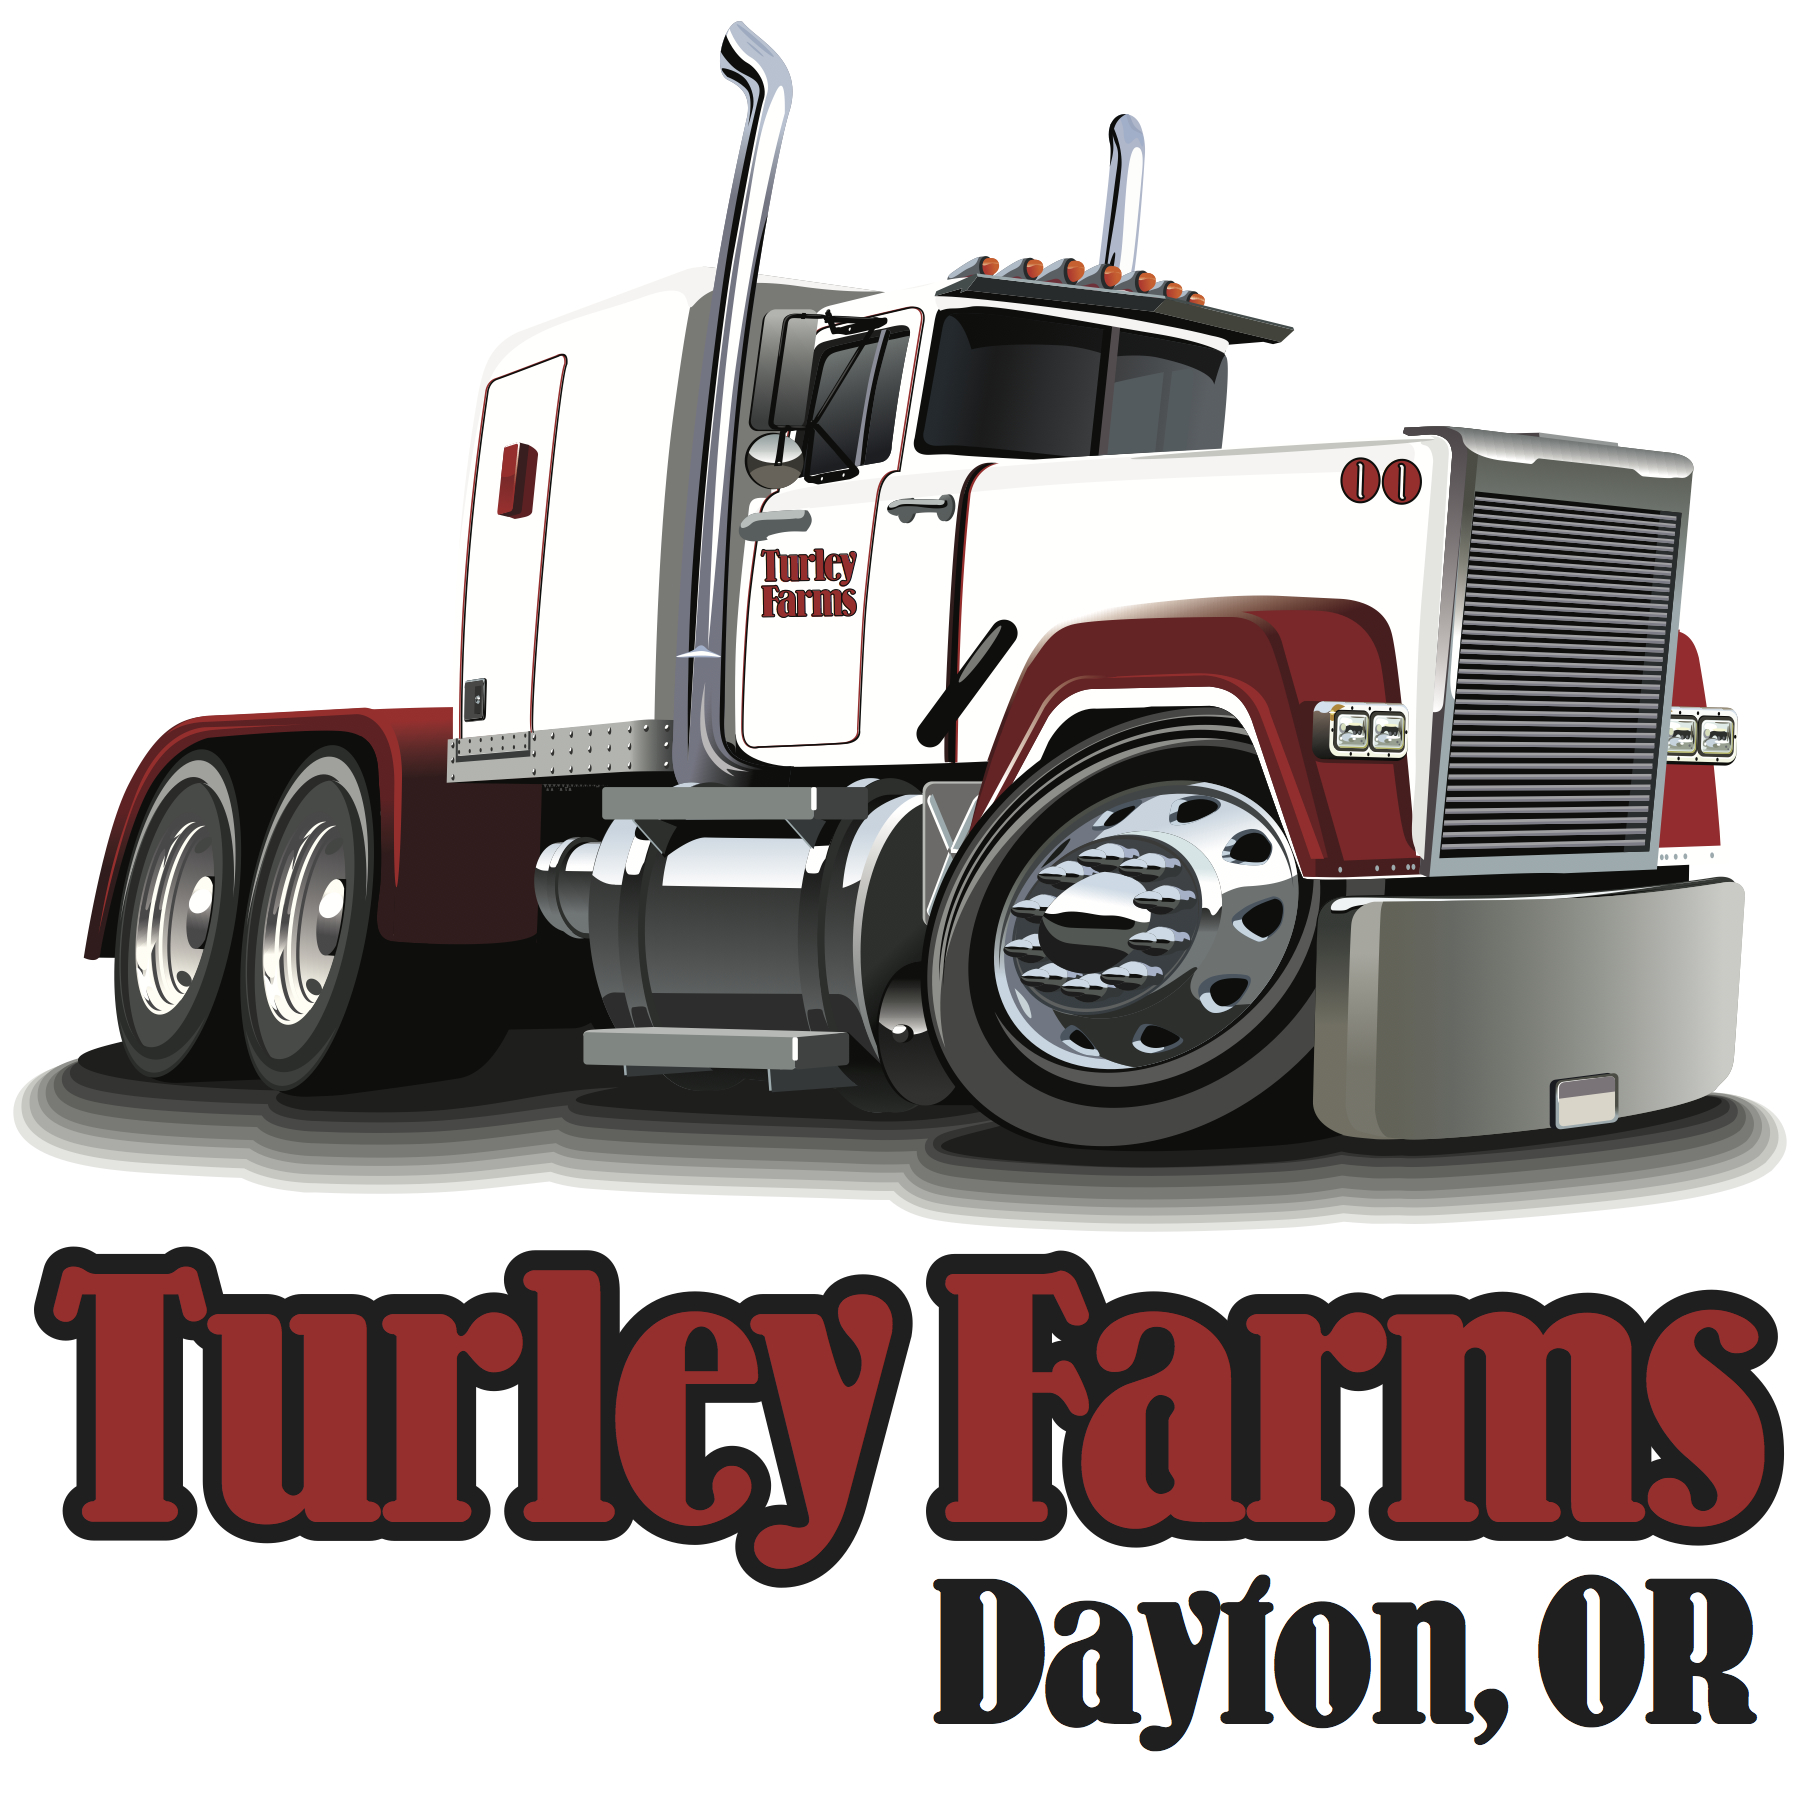 Turley-Farms-Logo